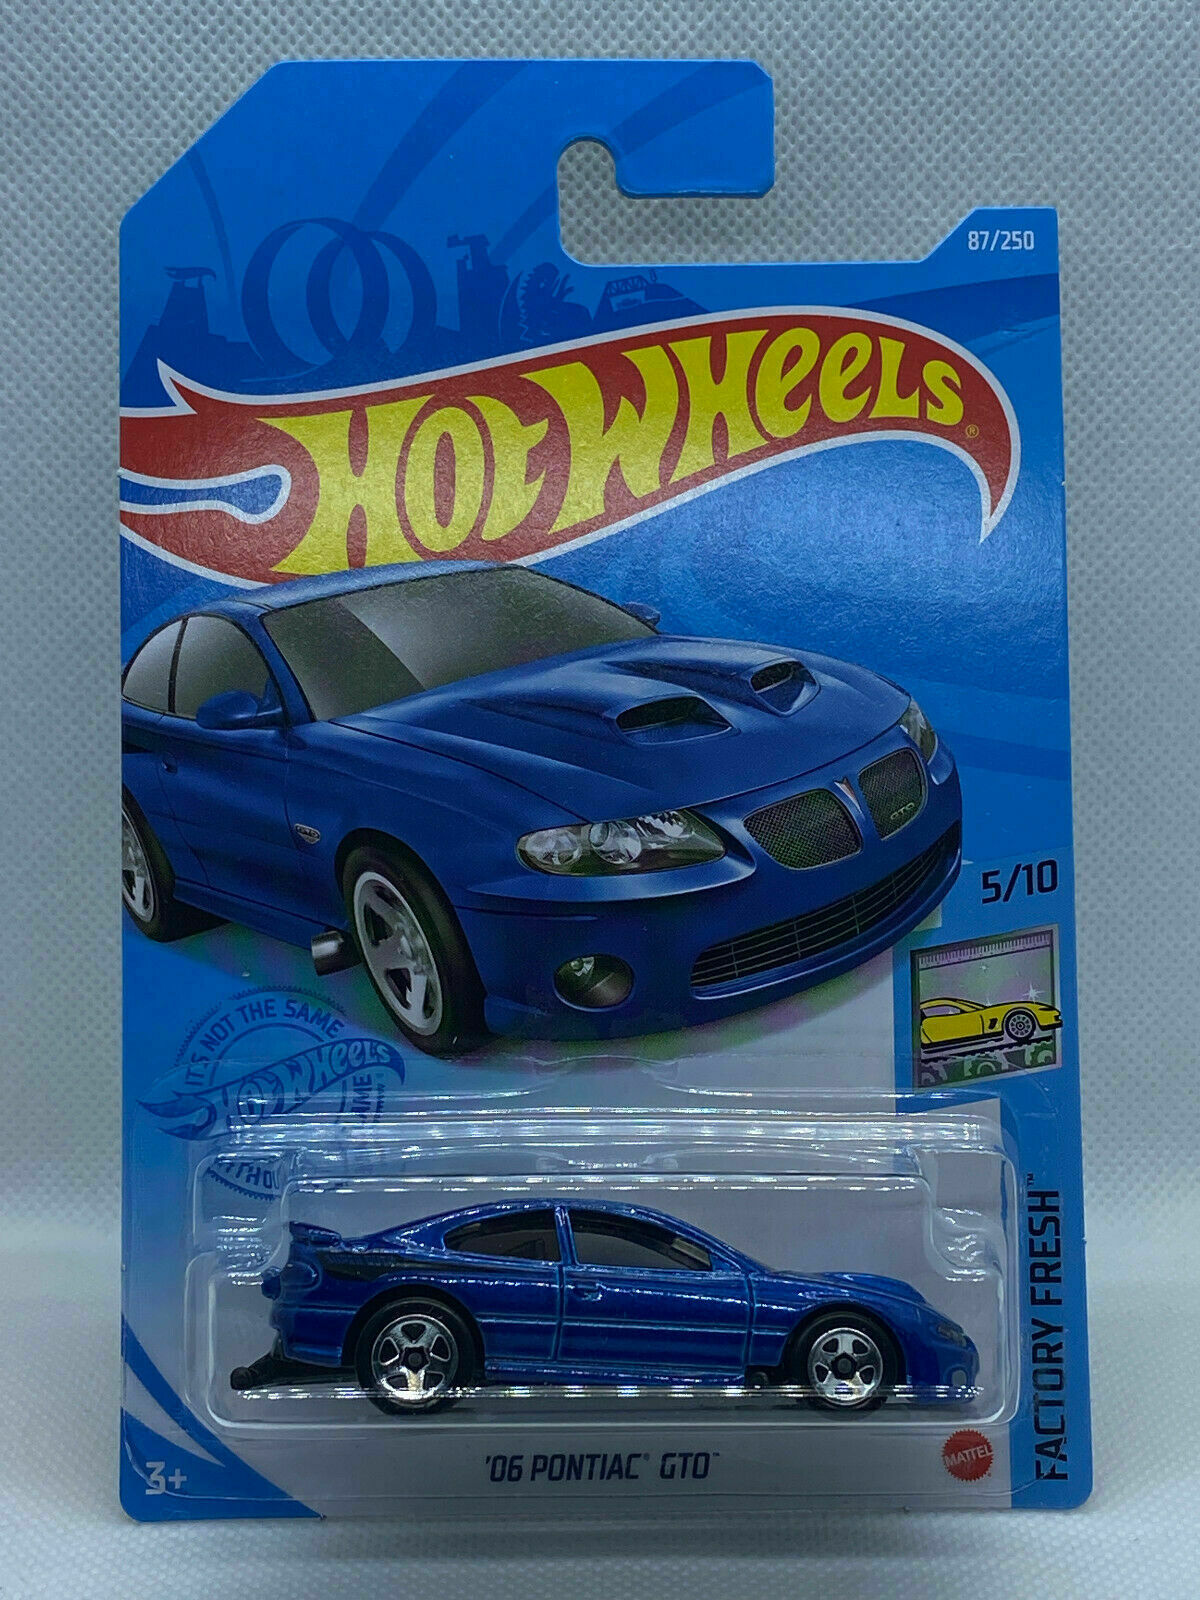 2021 Hot Wheels HW Factory Fresh #5/10 '06 Pontiac GTO #87/250 Blue NIP